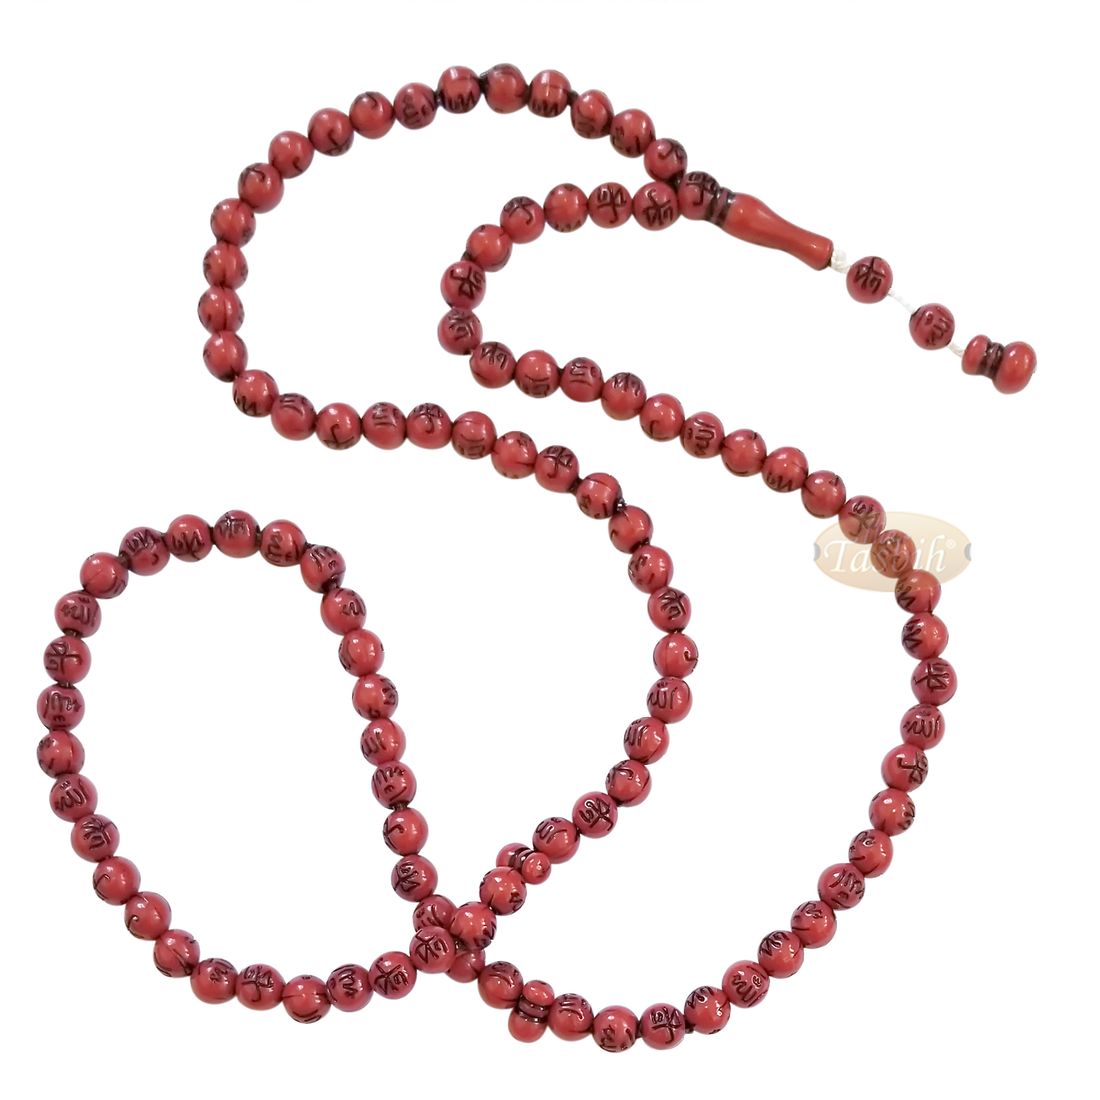 Muslim Prayer Beads Tasbih with ALLAH Muhammad Engraved on 7mm Beads 26-inch Dark Red Black – 99ct Tasbeeh Sibha Misbaha Dhikr Beads for SALAWAT